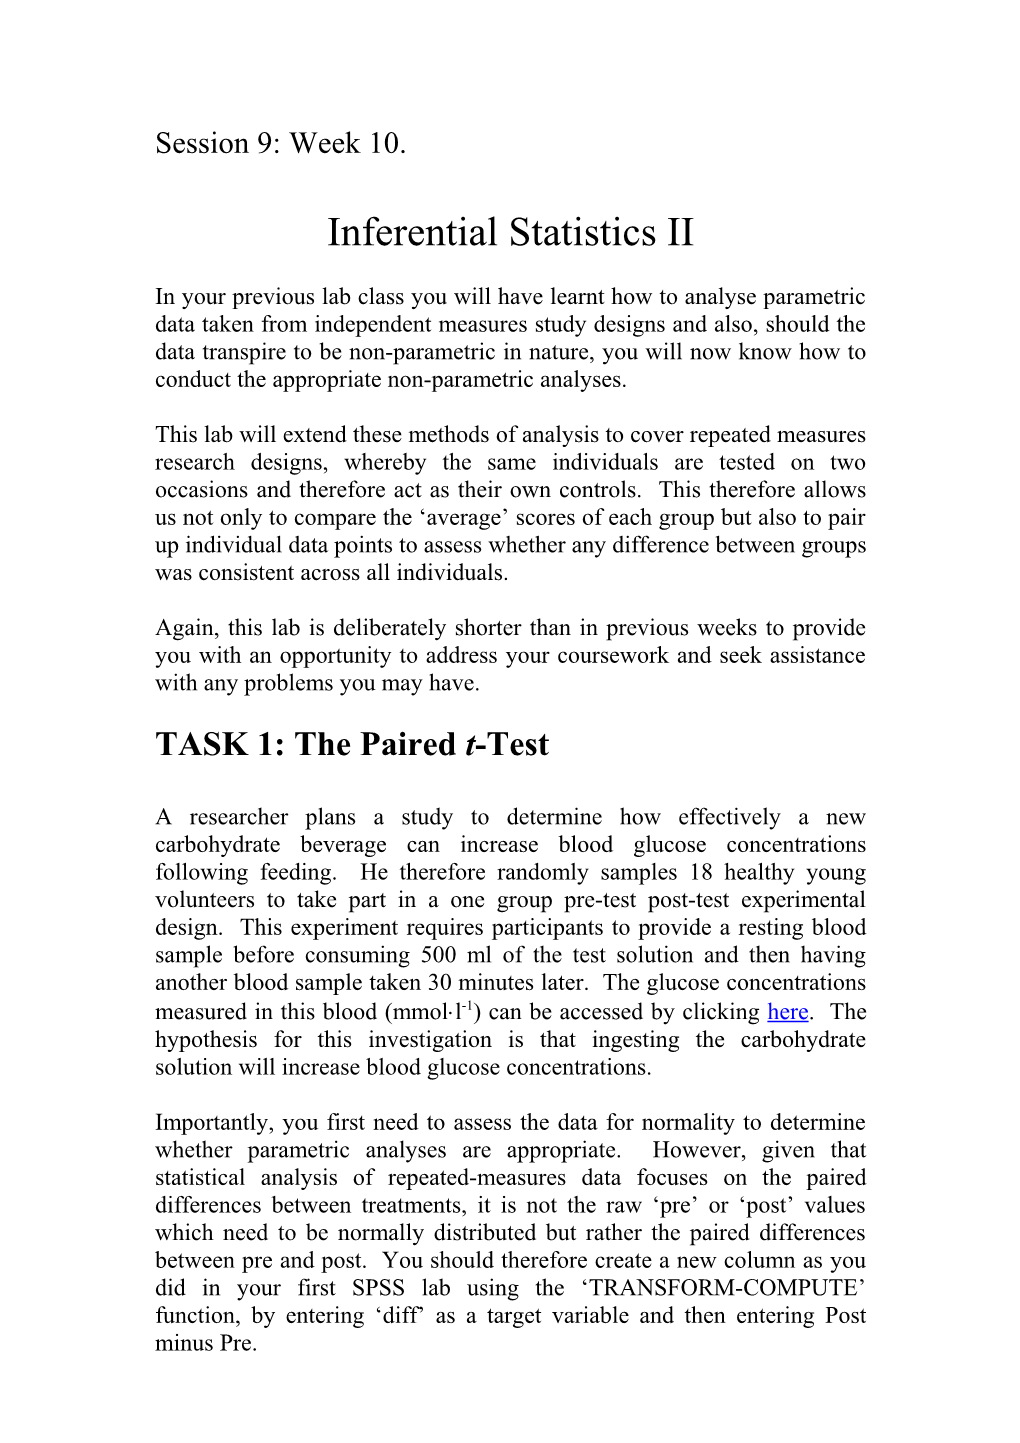 Inferential Statistics II